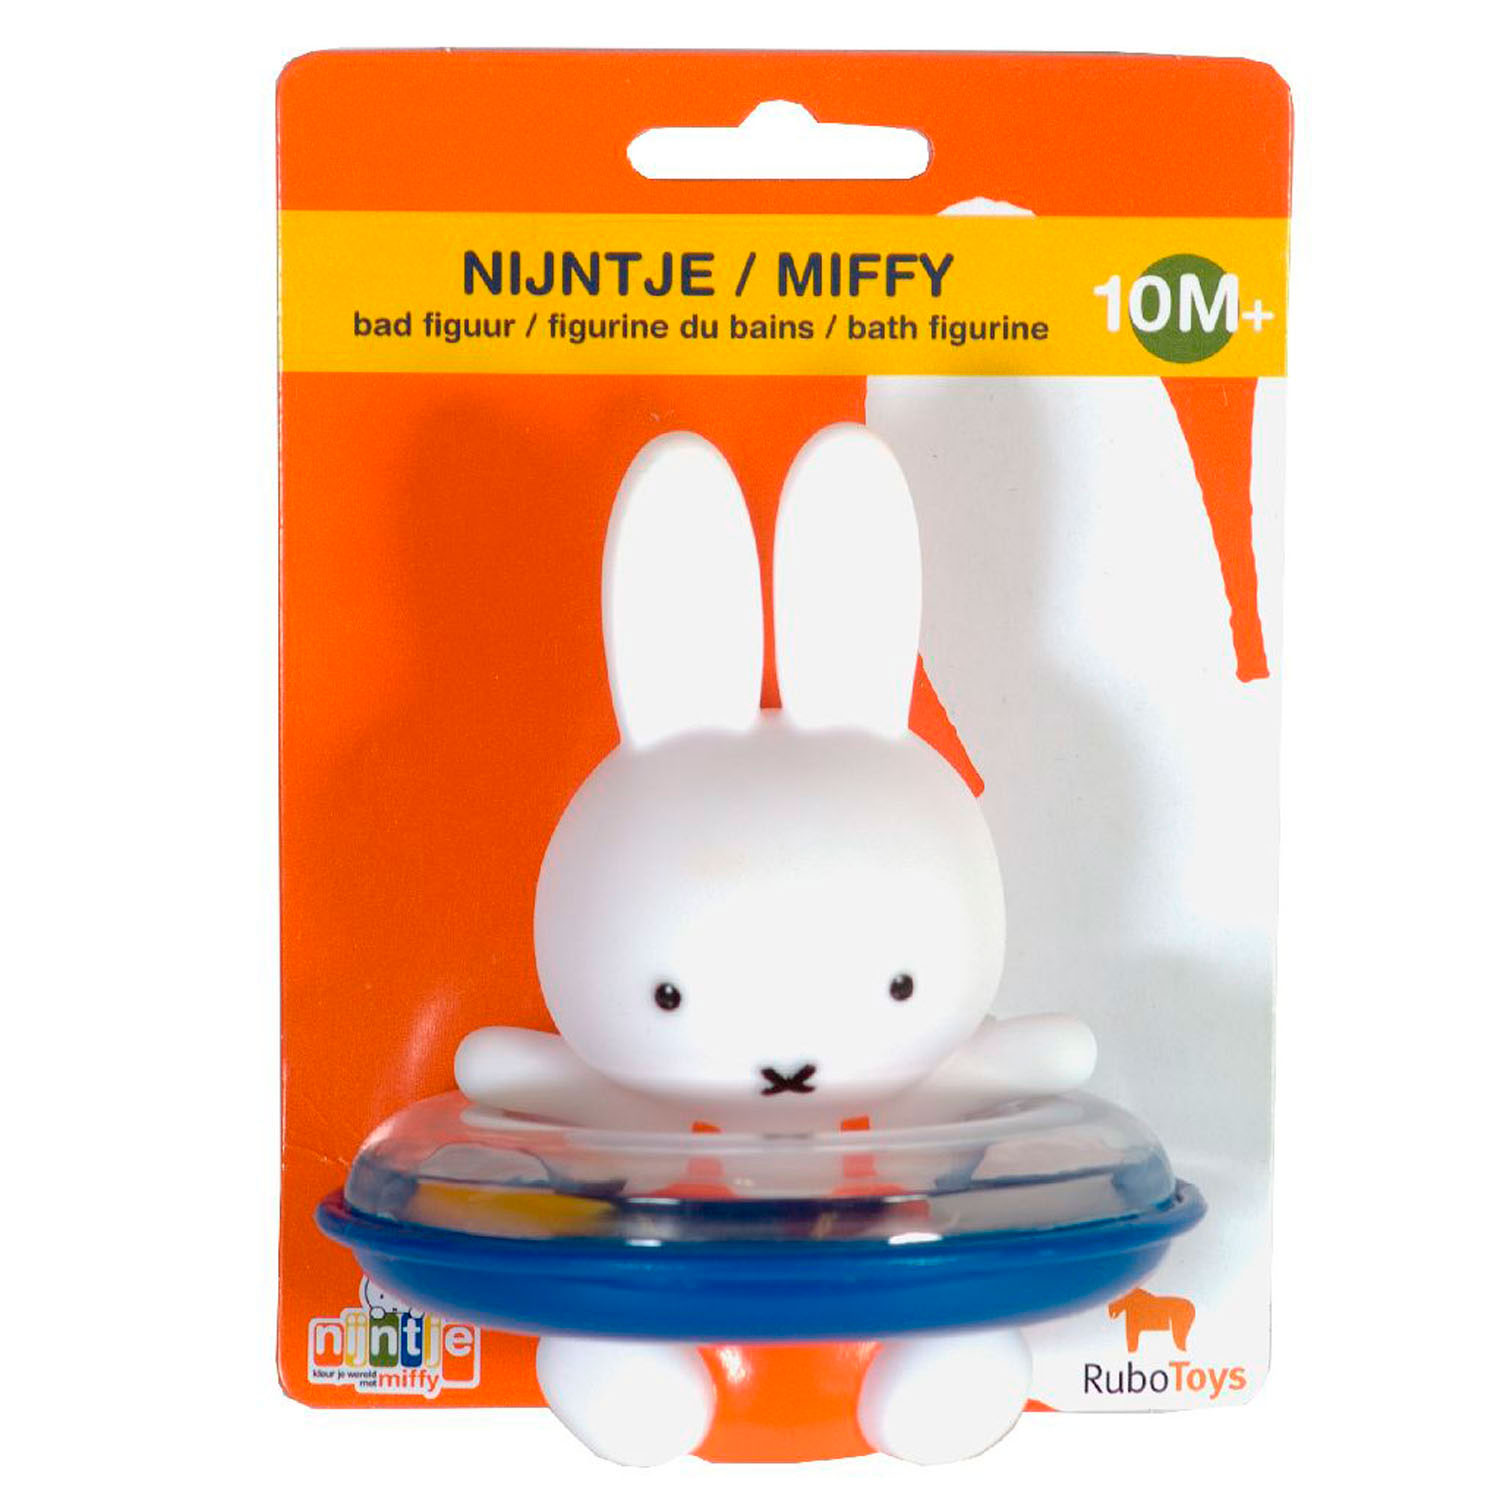 Miffy oder Nina Badfigure